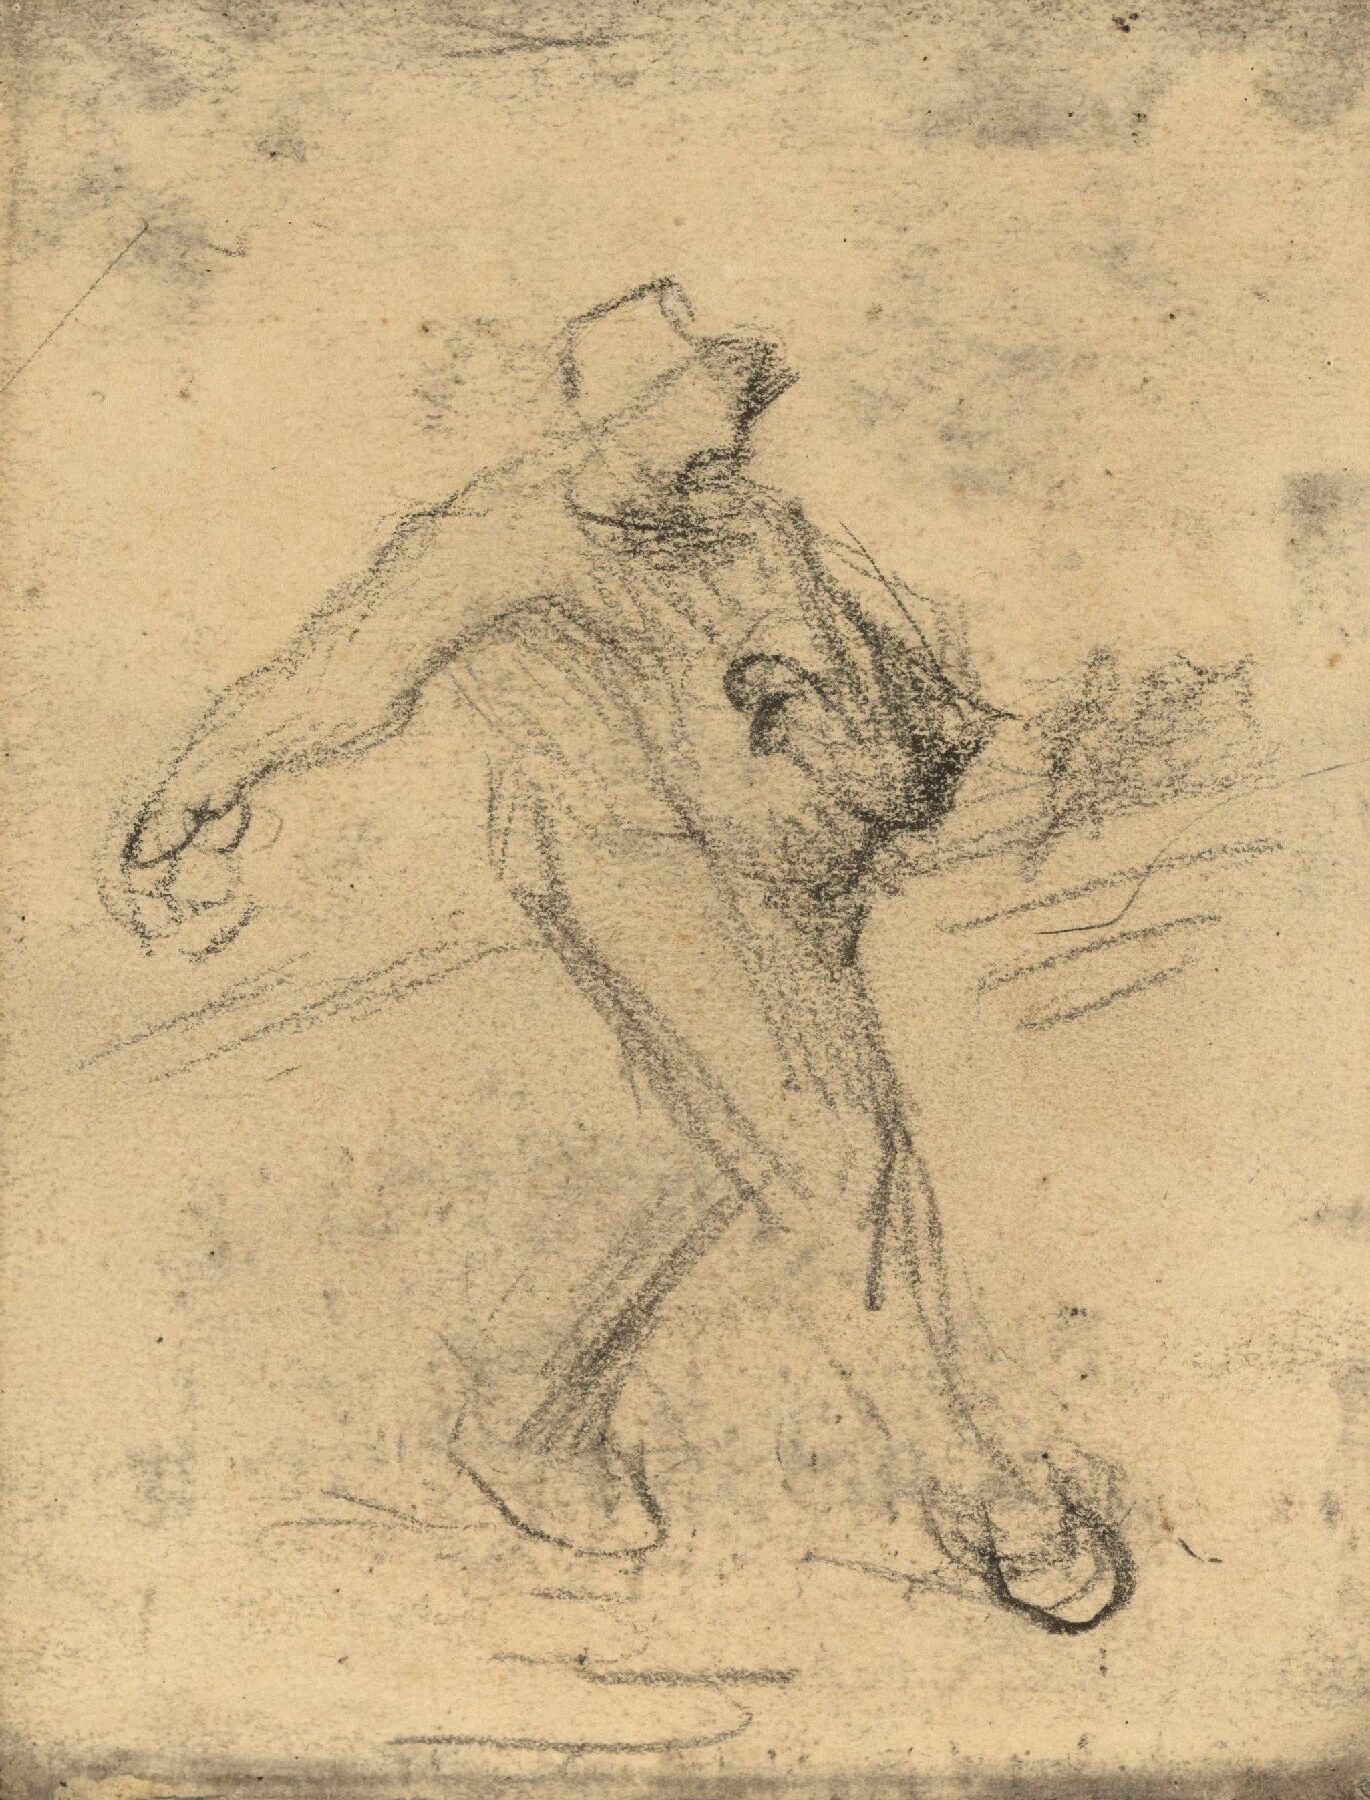 Zaaier Vincent van Gogh (1853 - 1890), juni 1885-juni 1886